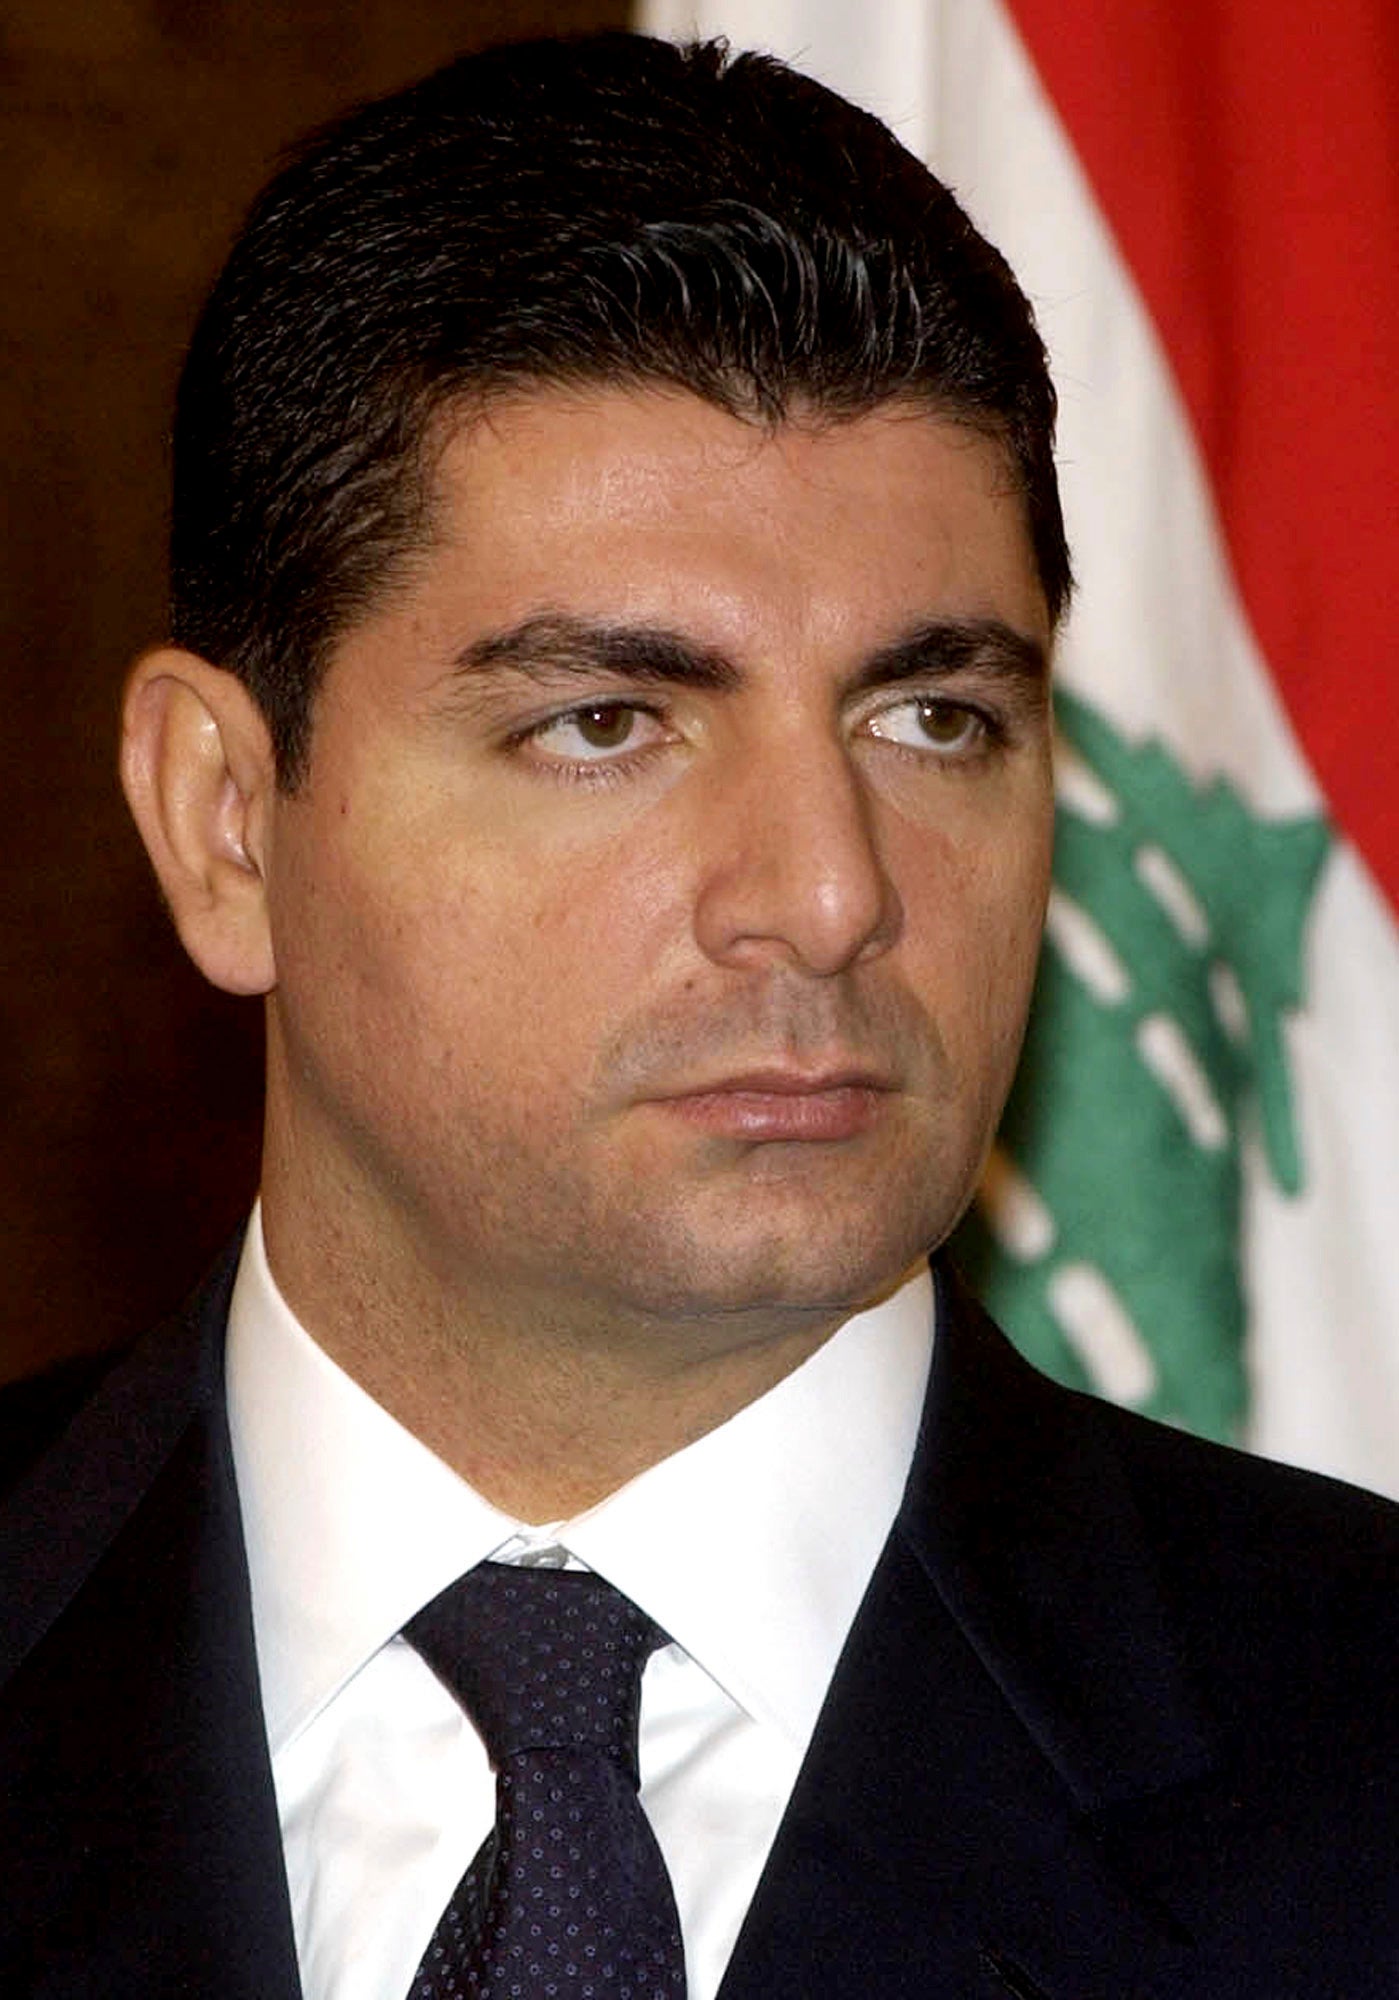 Lebanon Hariri